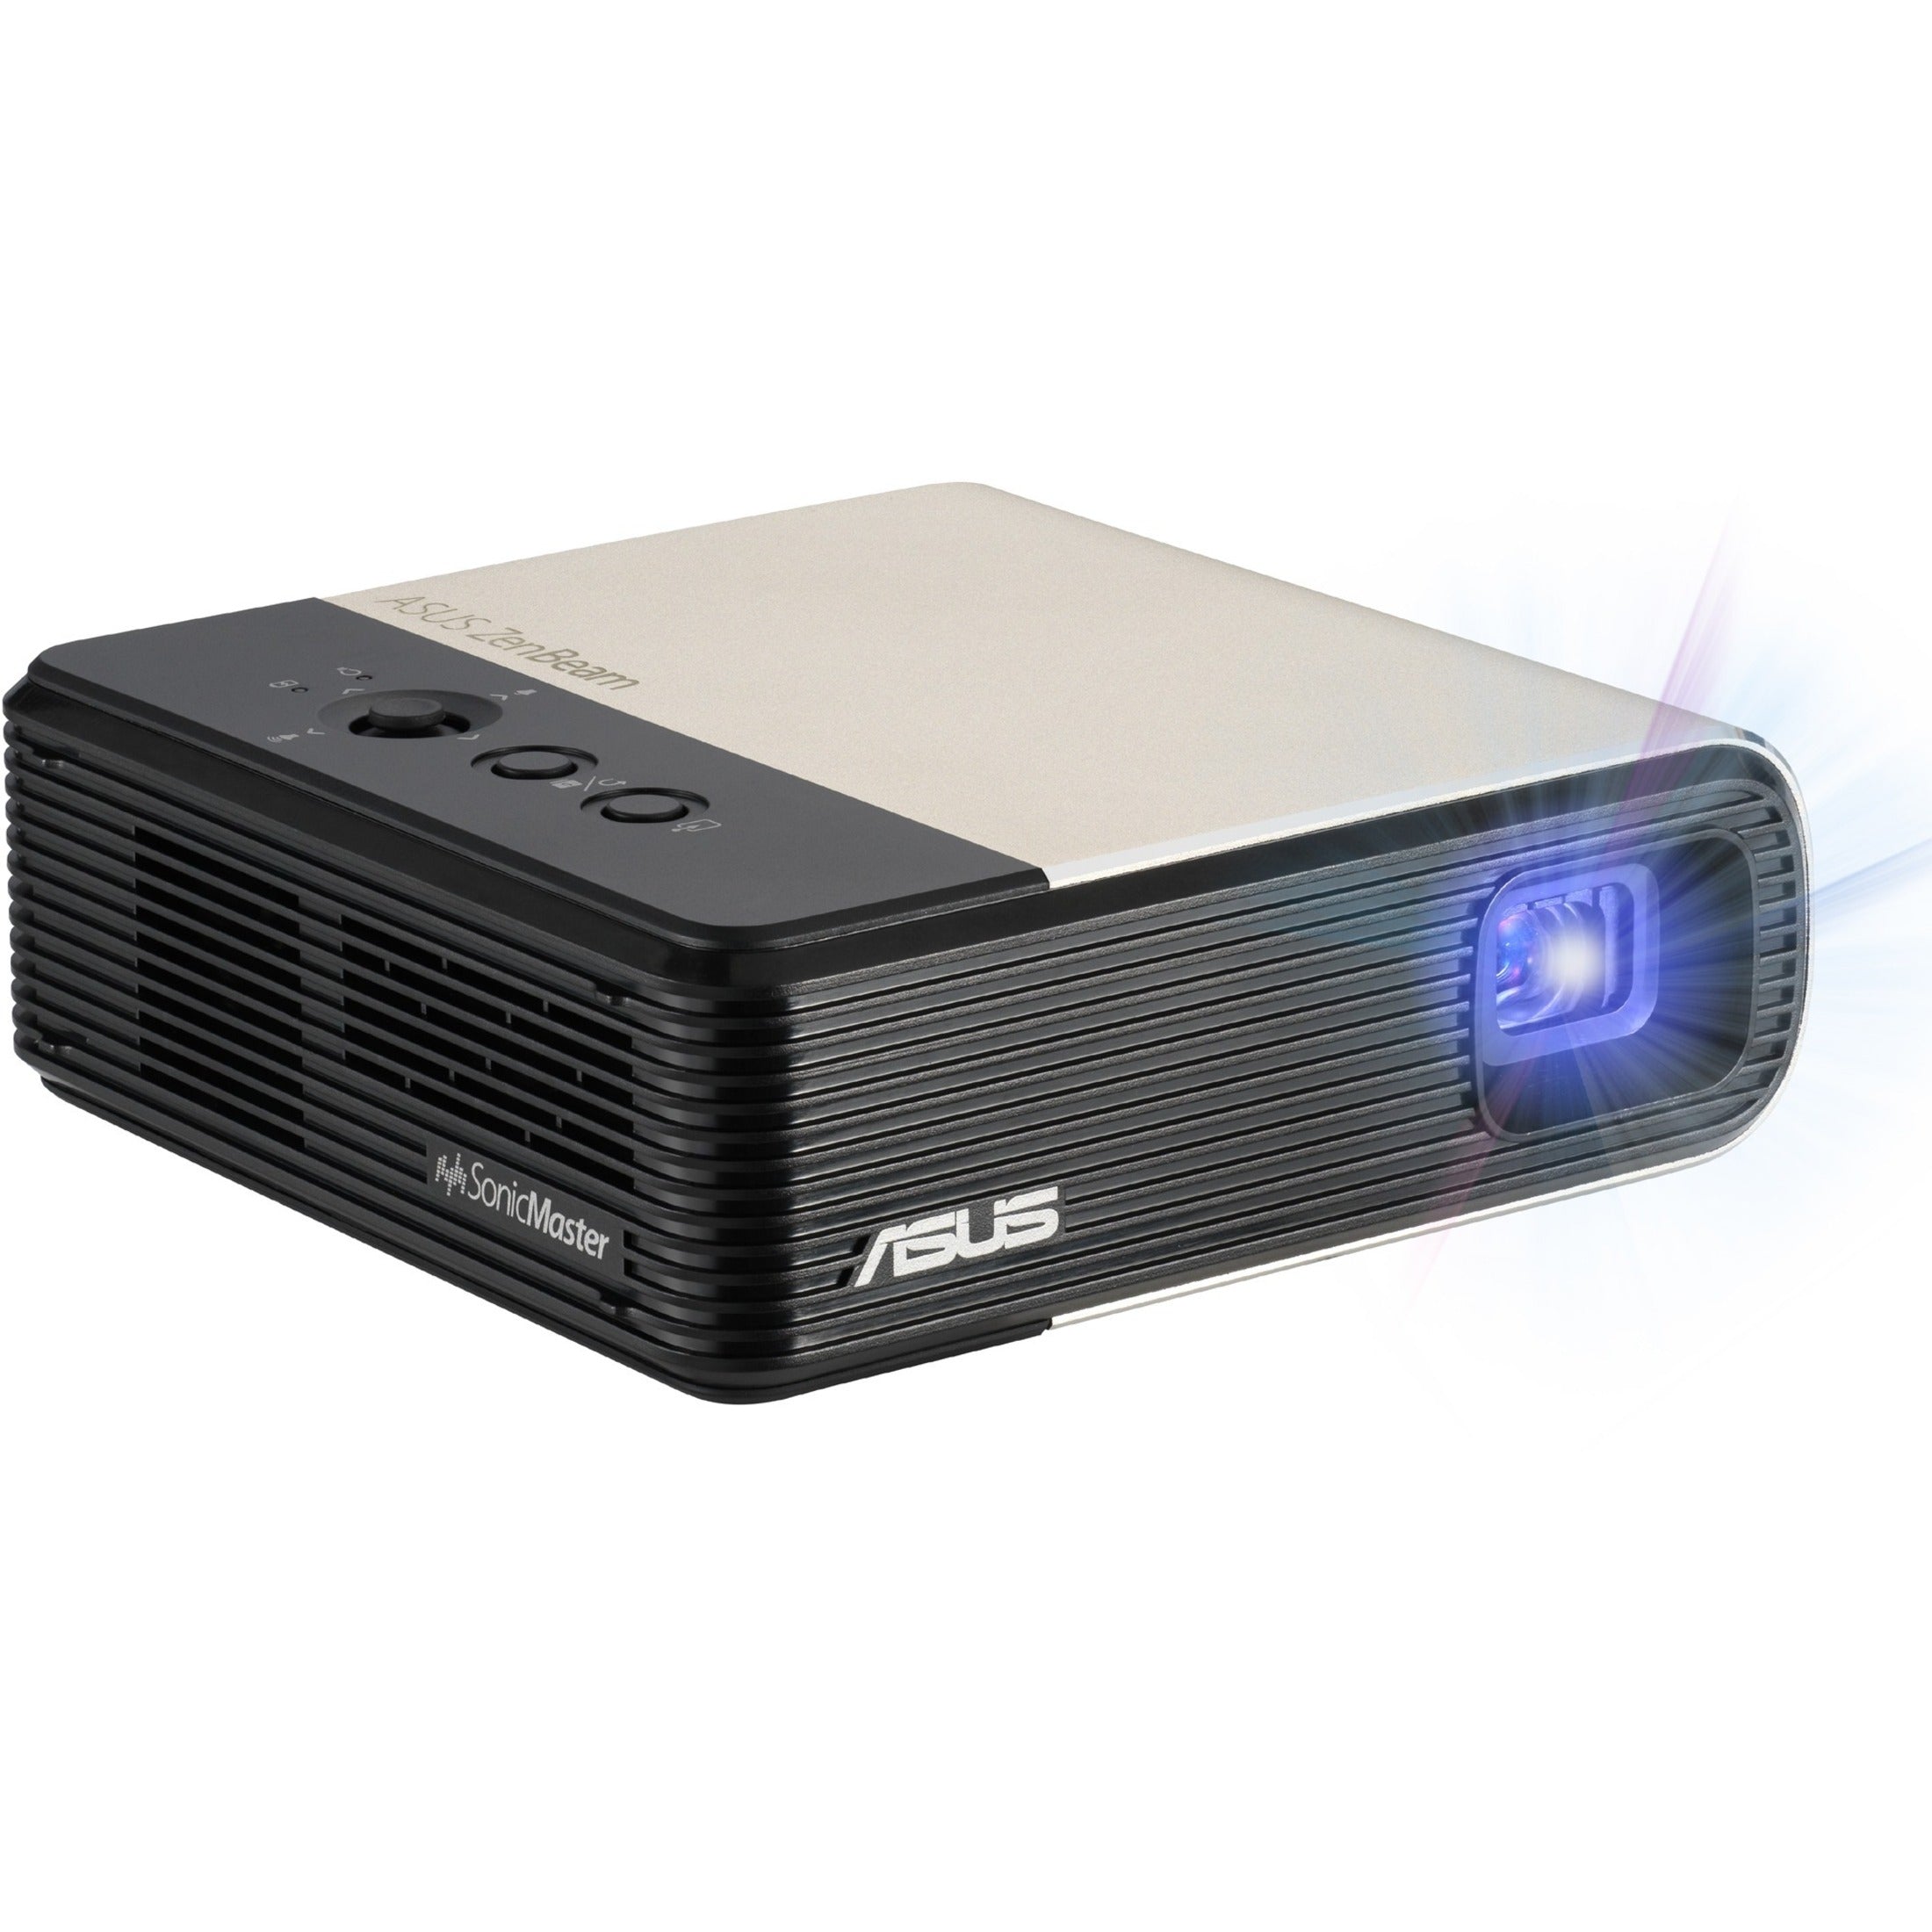 Asus ZENBEAM E2 DLP Projector - Portable Entertainment, LED Lamp, WVGA, 16:9, 300 lm